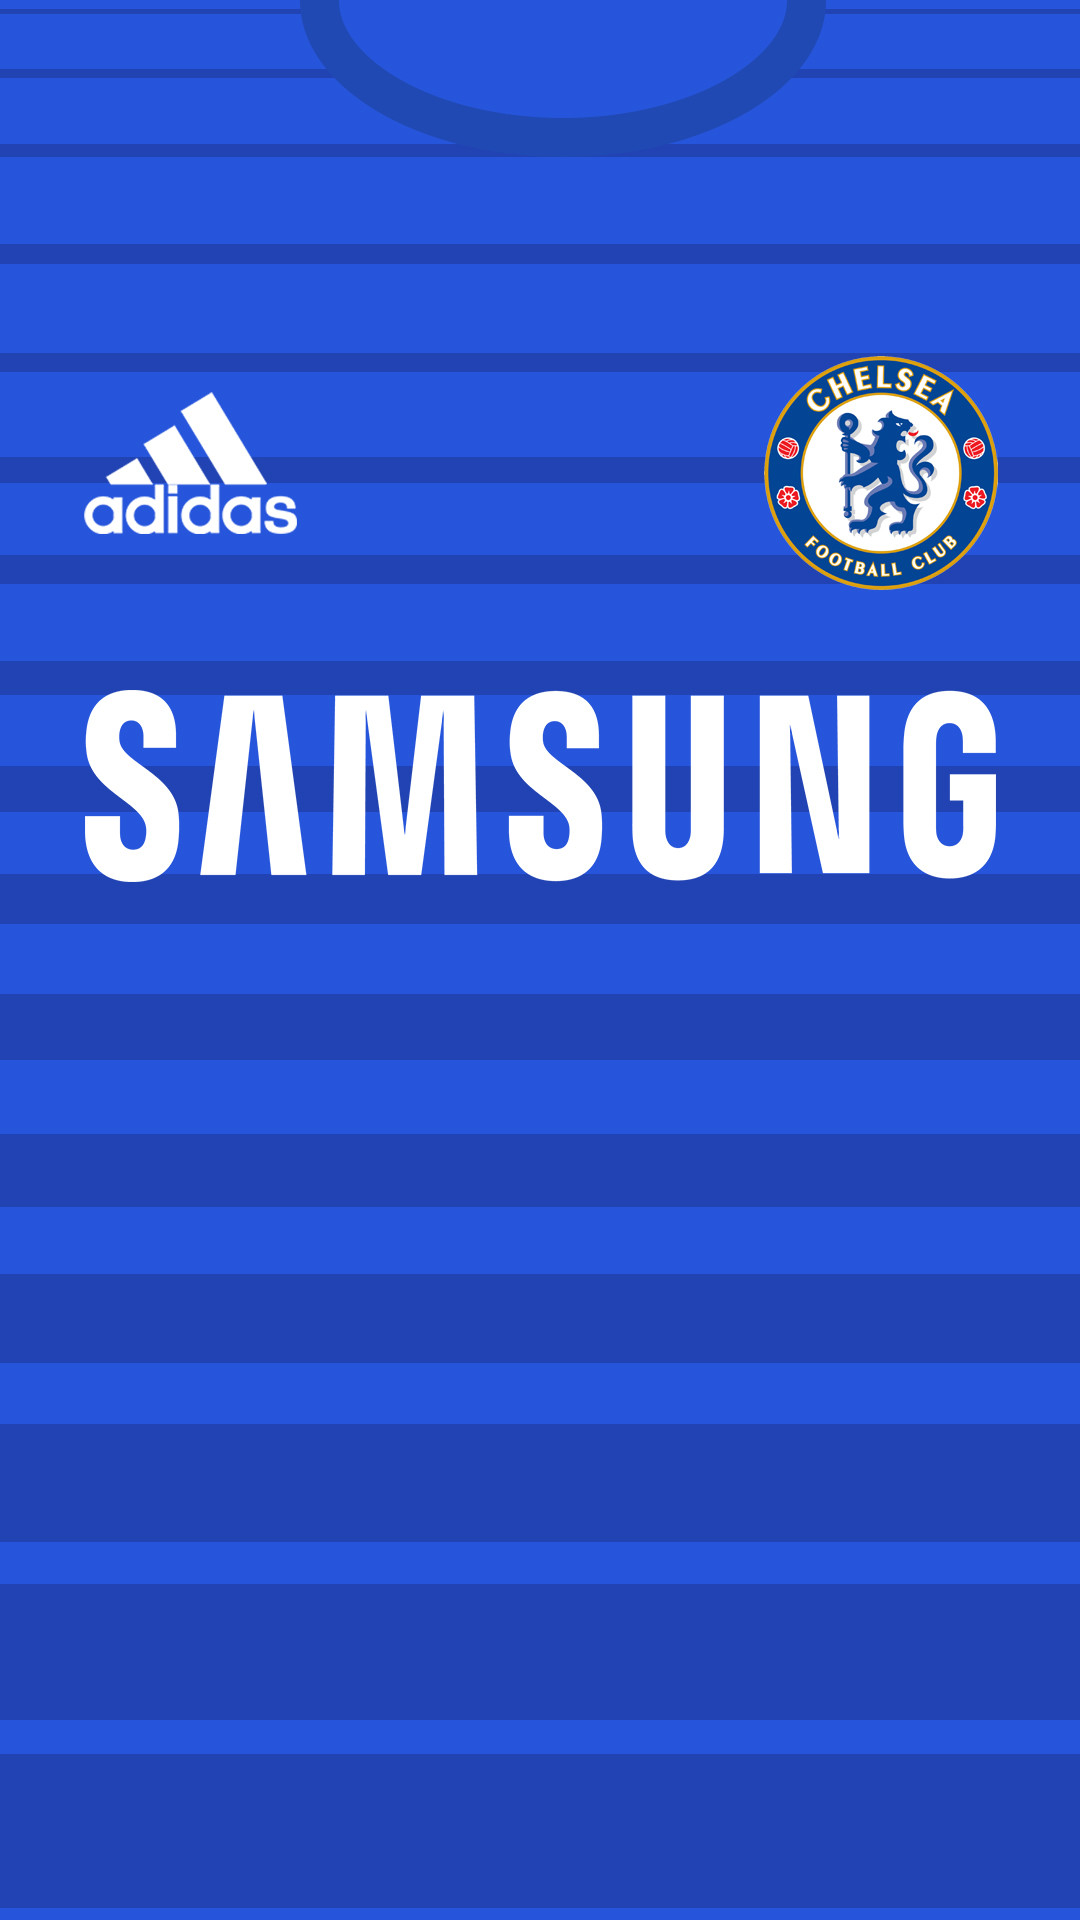 chelsea wallpaper iphone,blue,text,electric blue,font,logo